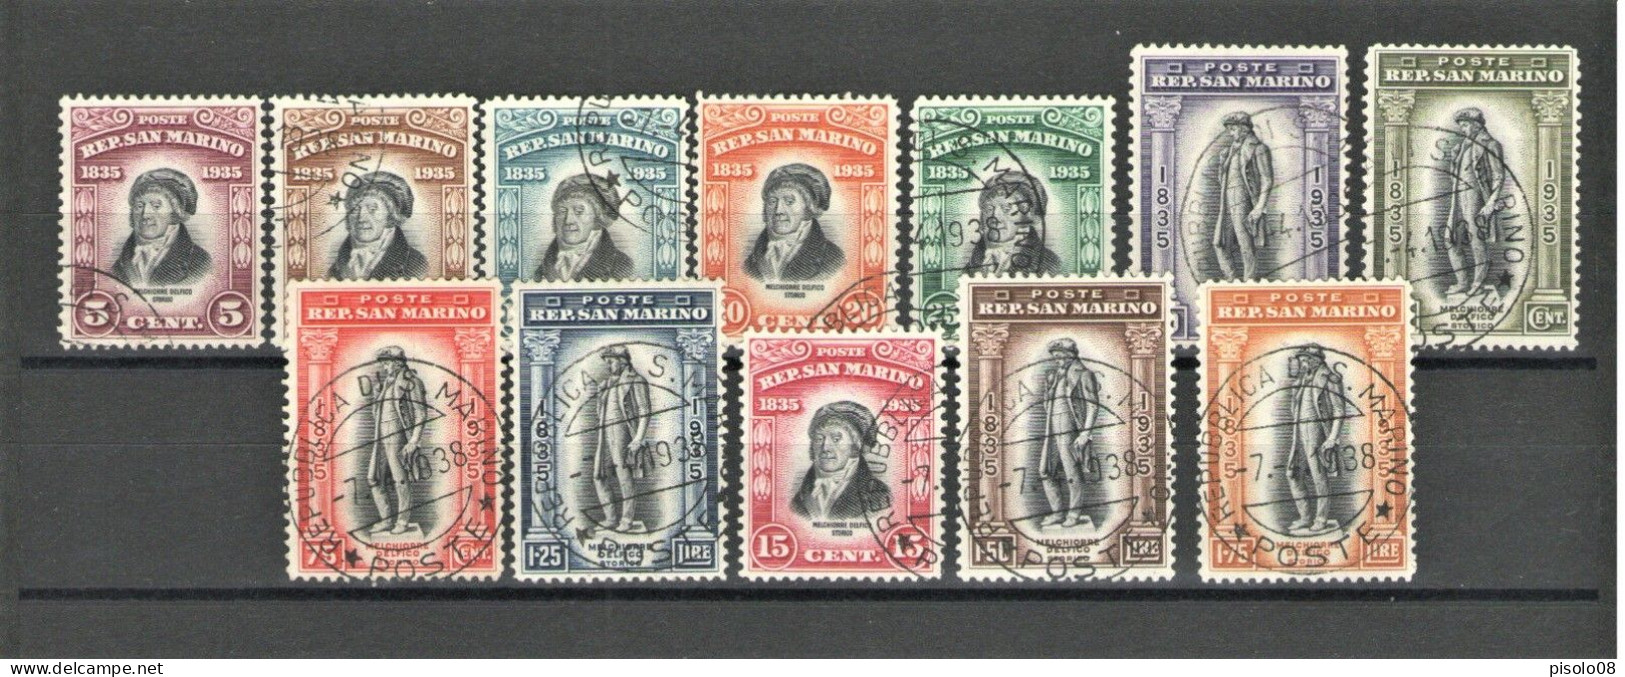 SAN MARINO 1935 DELFICO SERIE CPL. USATA - Used Stamps